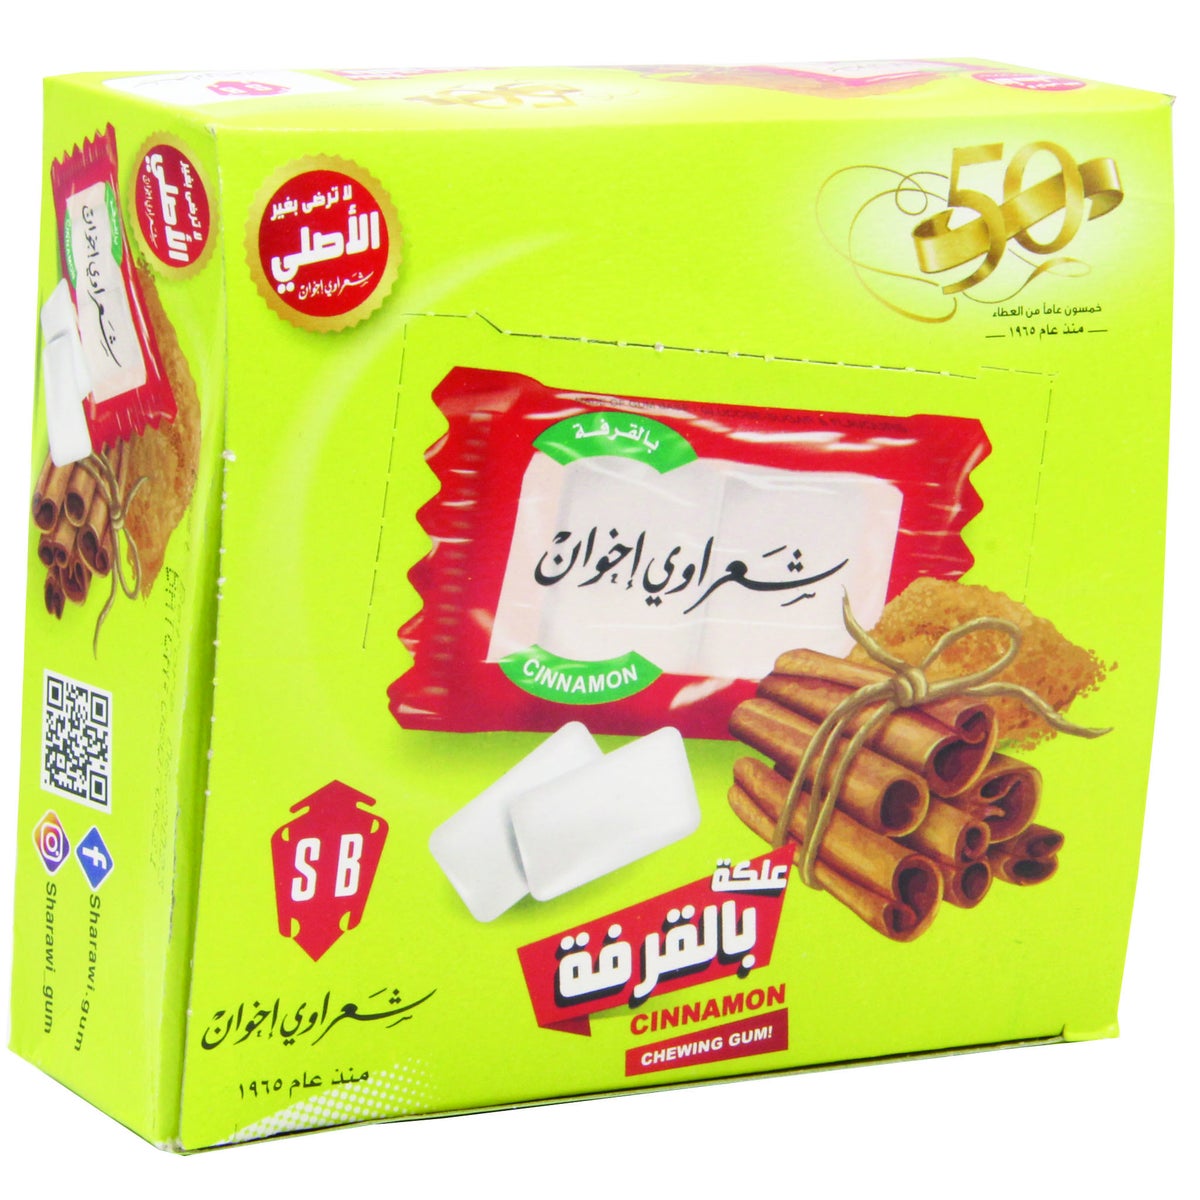 Sharawi Cinnamon Chewing Gum 100 Ct. x 24 (290g)